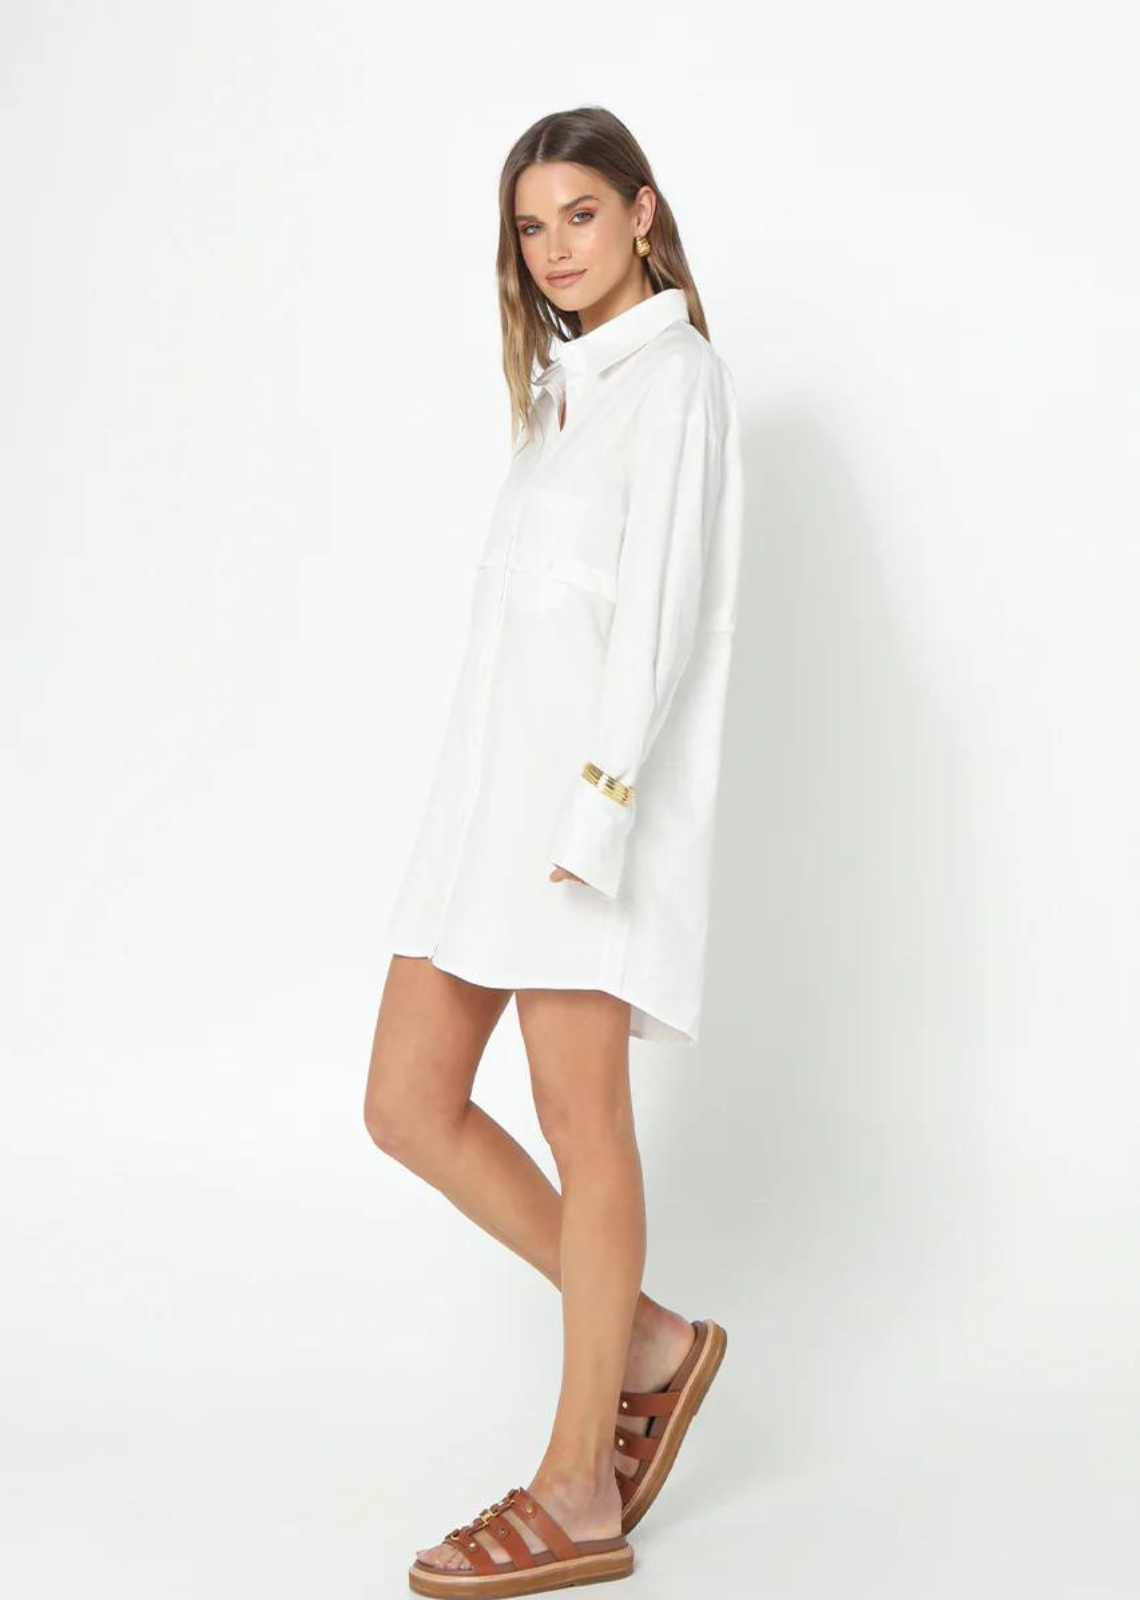 Madison The Label Taya Shirt Dress. White collared shirt dress.